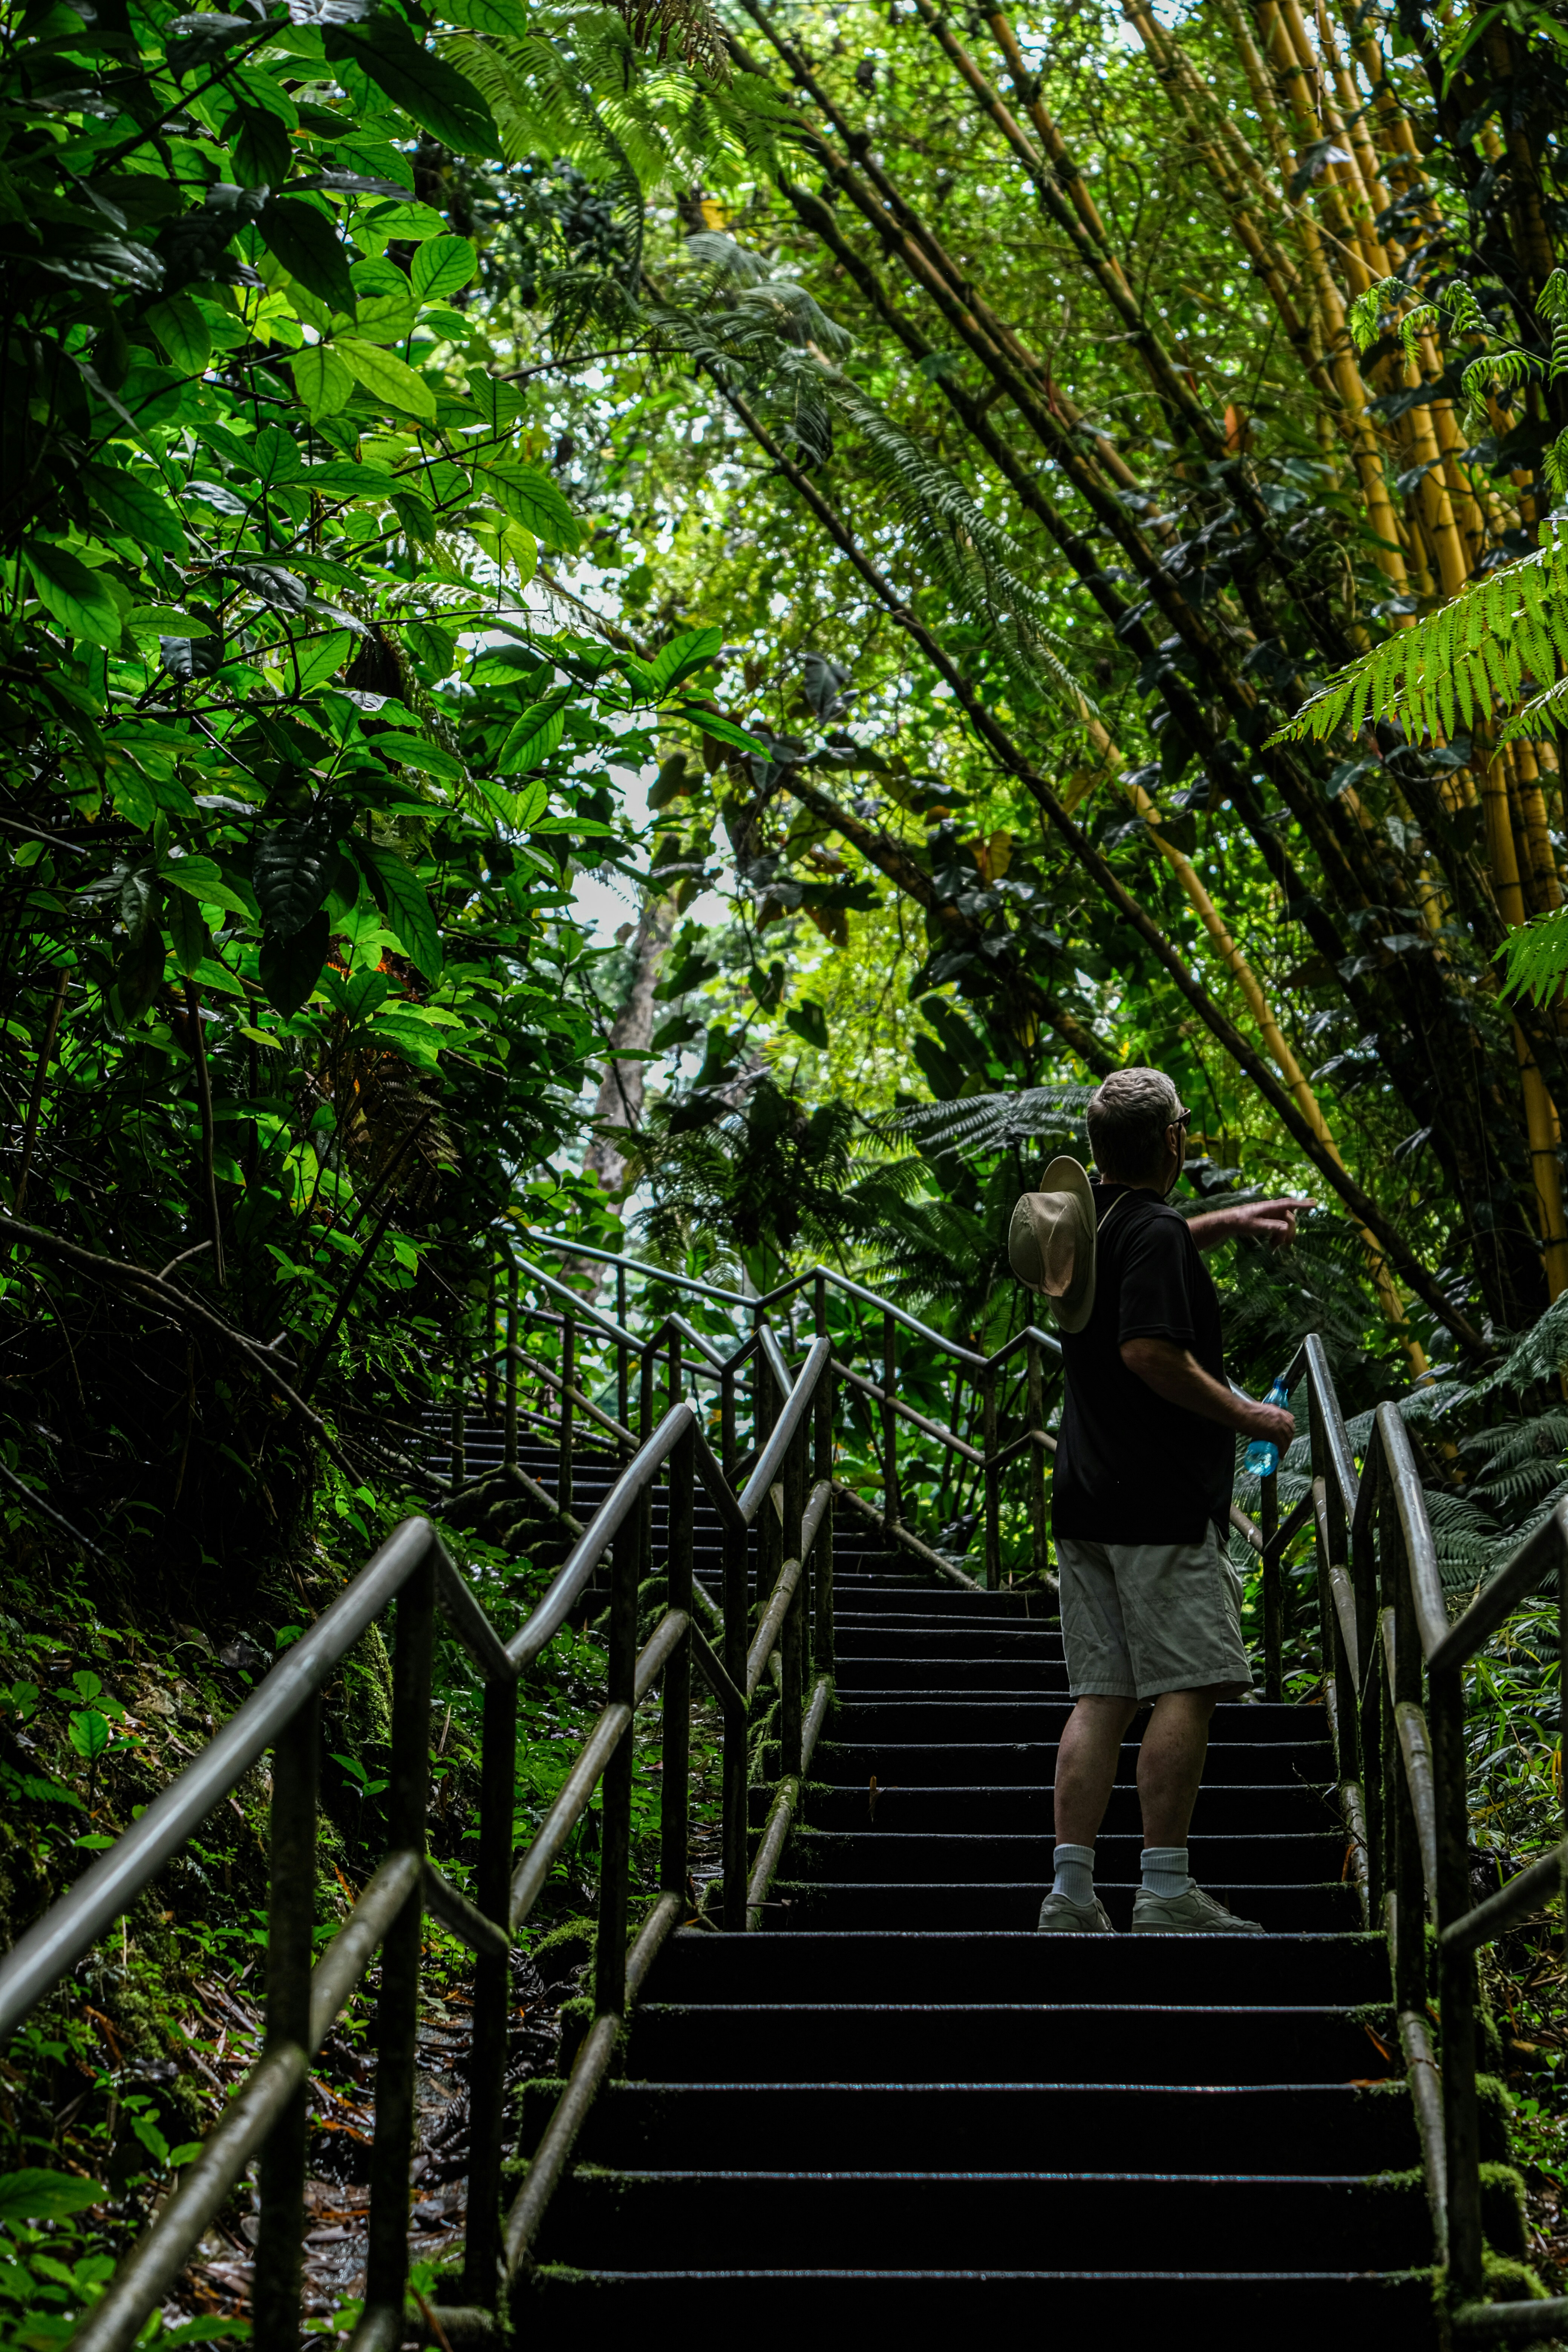 hawai‘i tropical bioreserve & garden